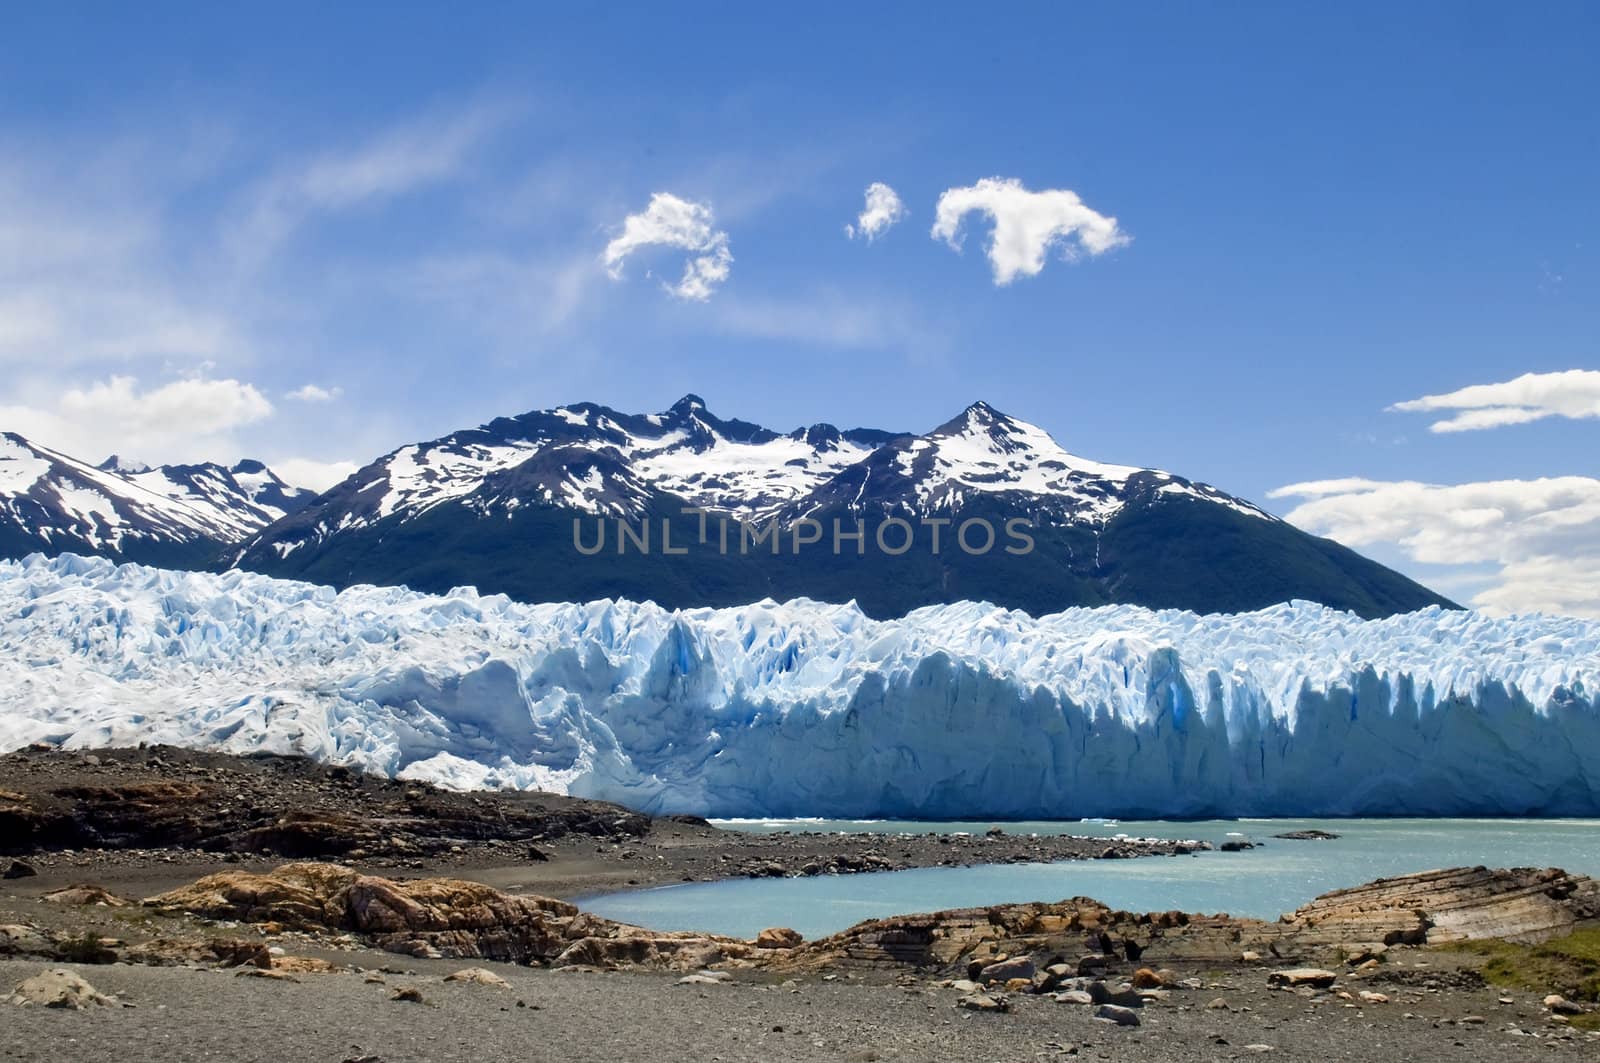 glaciers of Argentina by irisphoto4